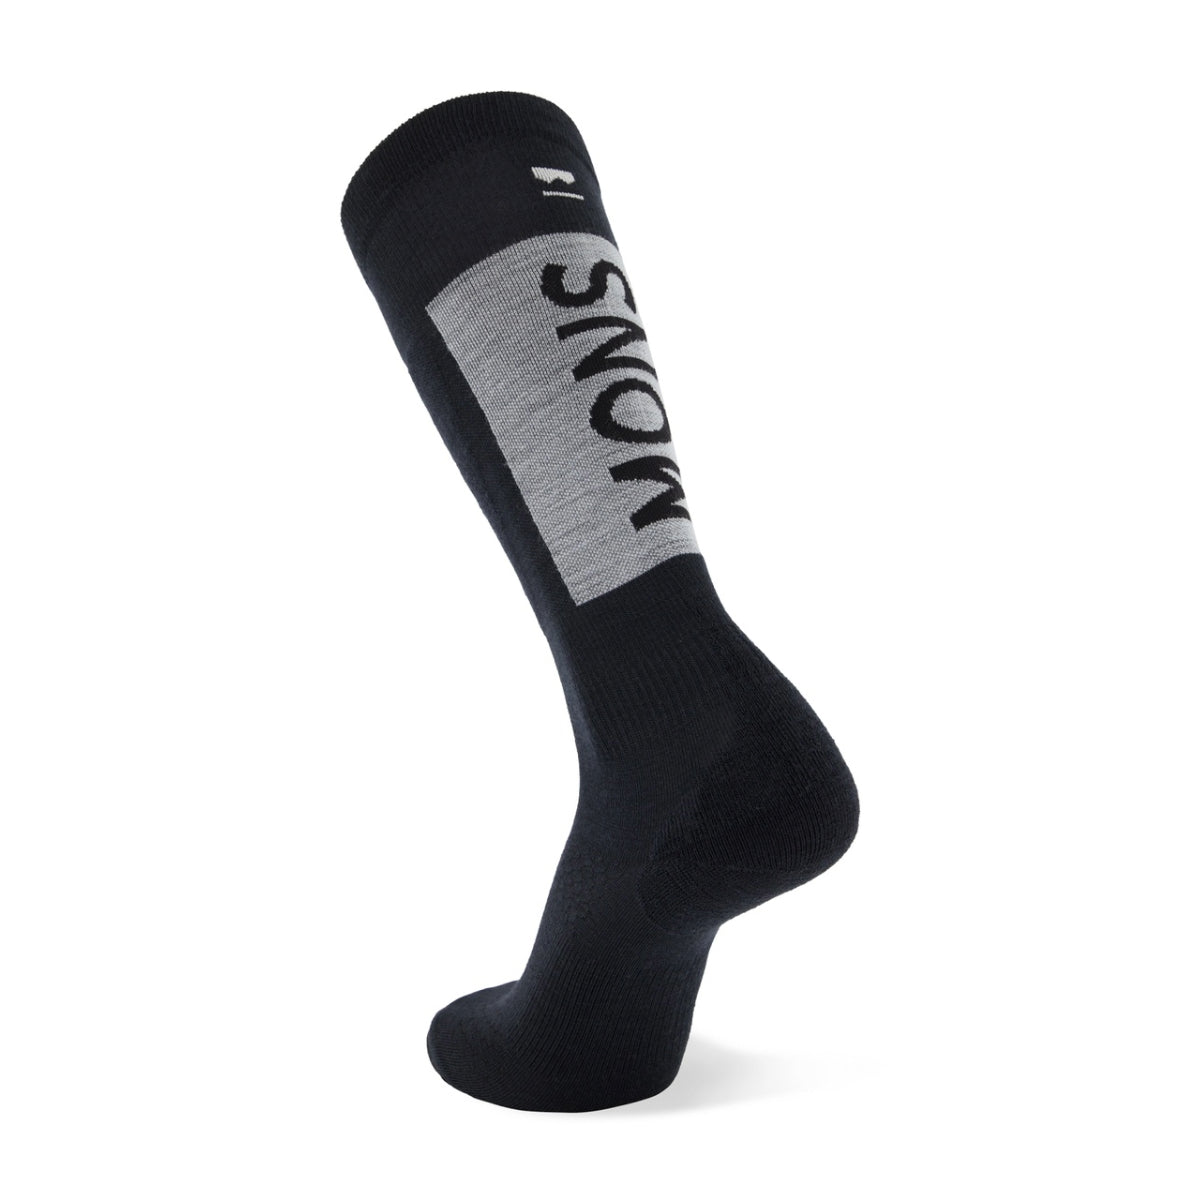 Mons Royale - Unisex Atlas Merino Snow Sock Digital - Black